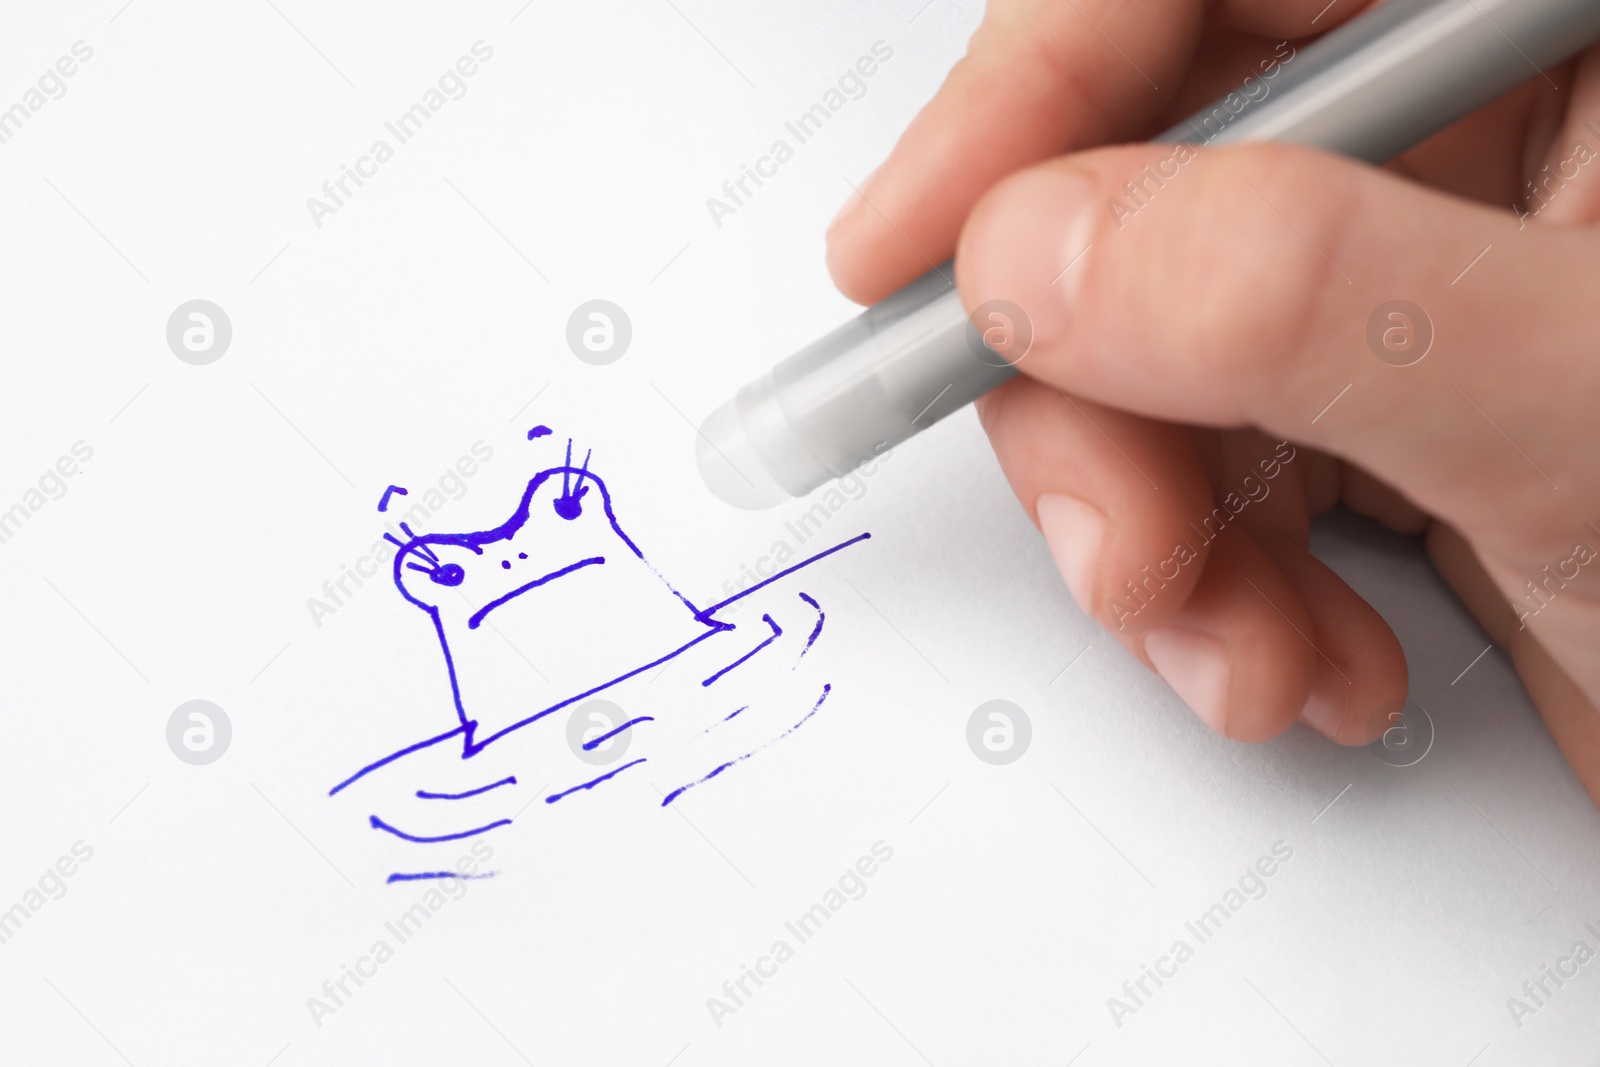 Photo of Child erasing drawing with erasable pen on paper sheet, closeup